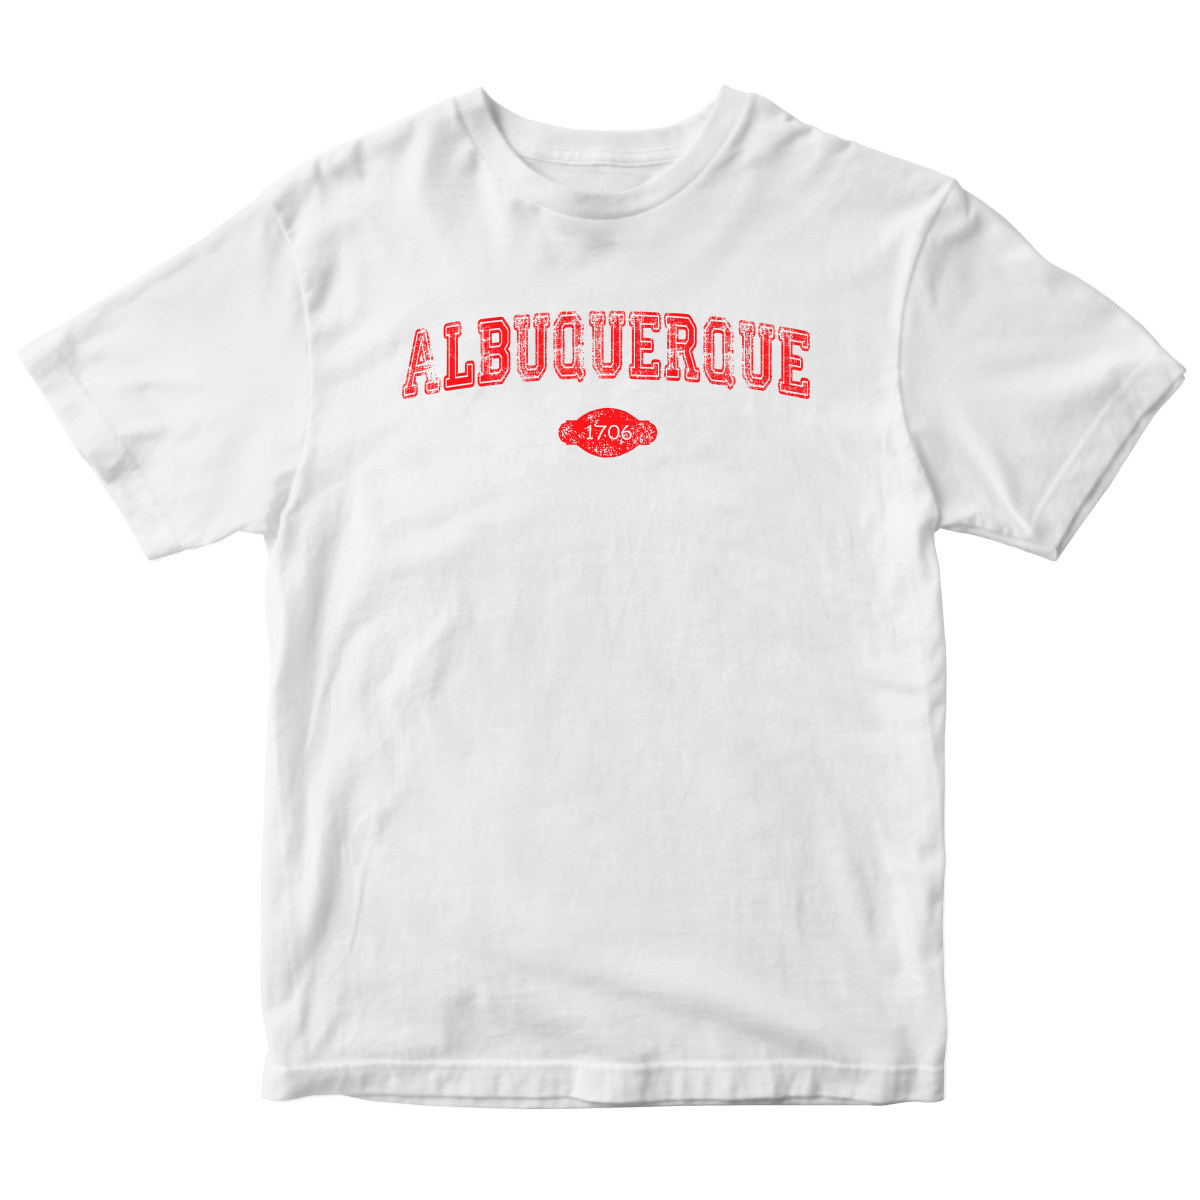 Albuquerque 1706 Represent Toddler T-shirt | White